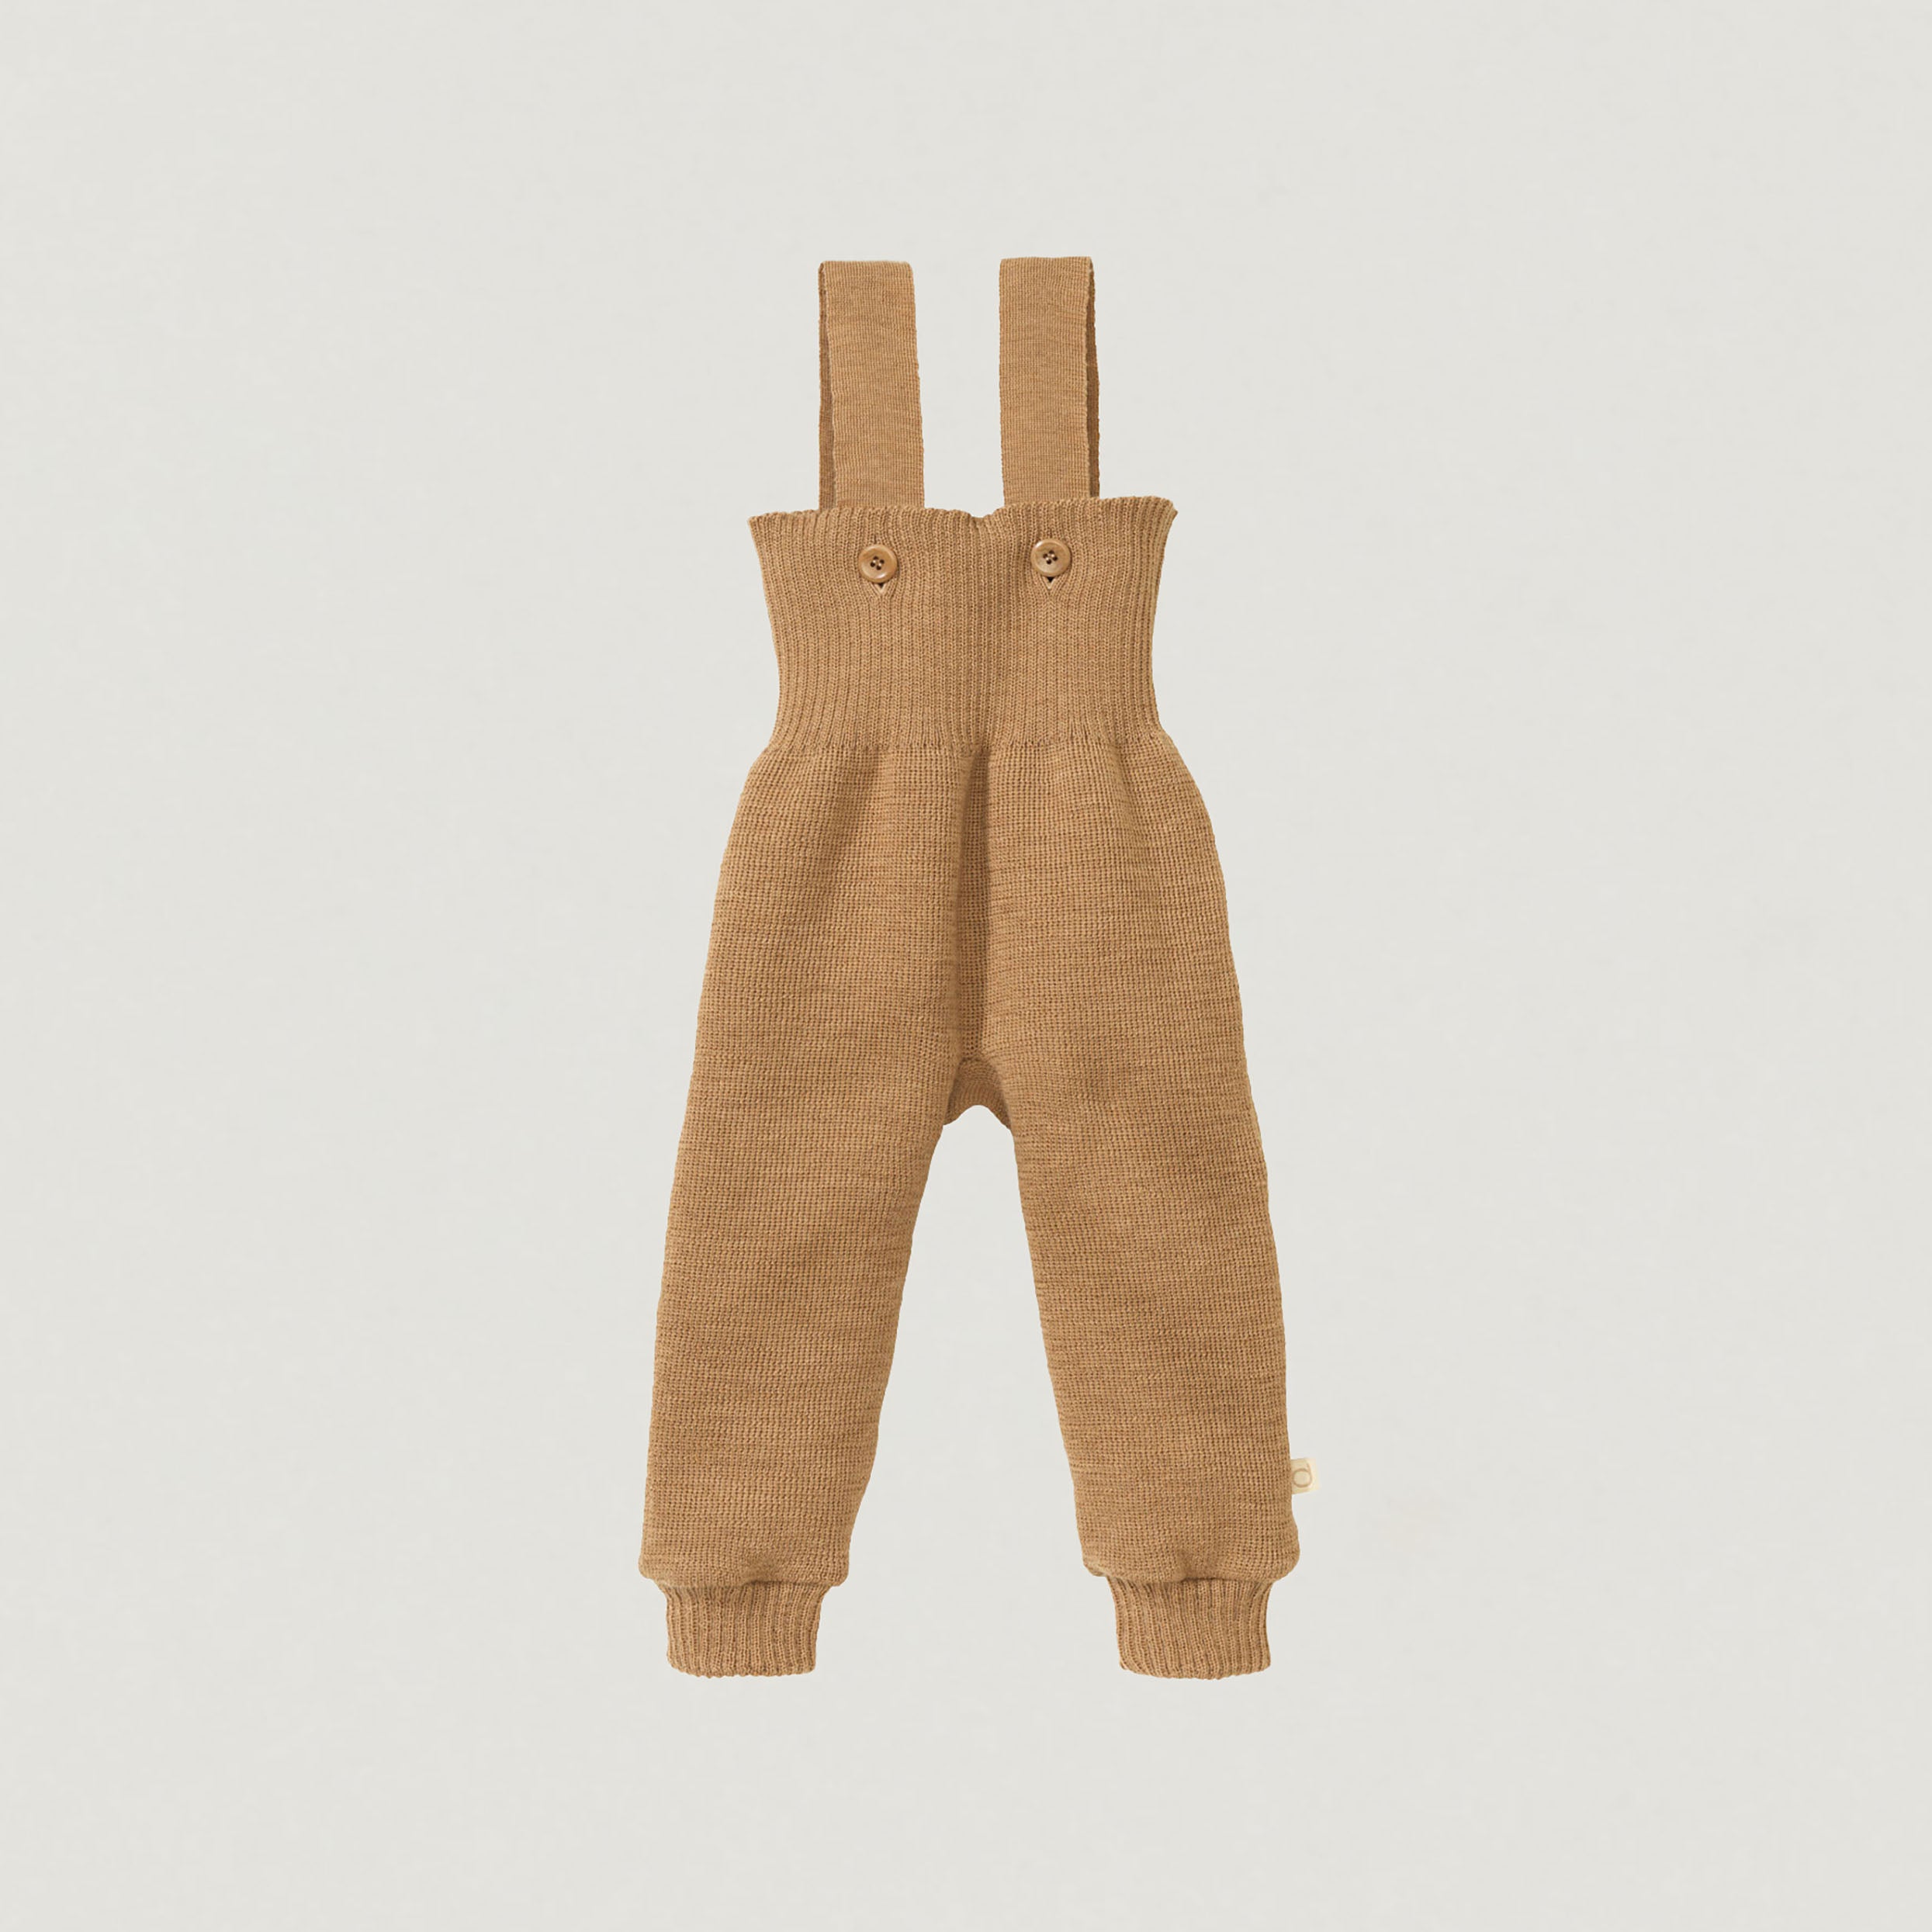 Knitted bib shorts made from 100% organic virgin wool by Disana